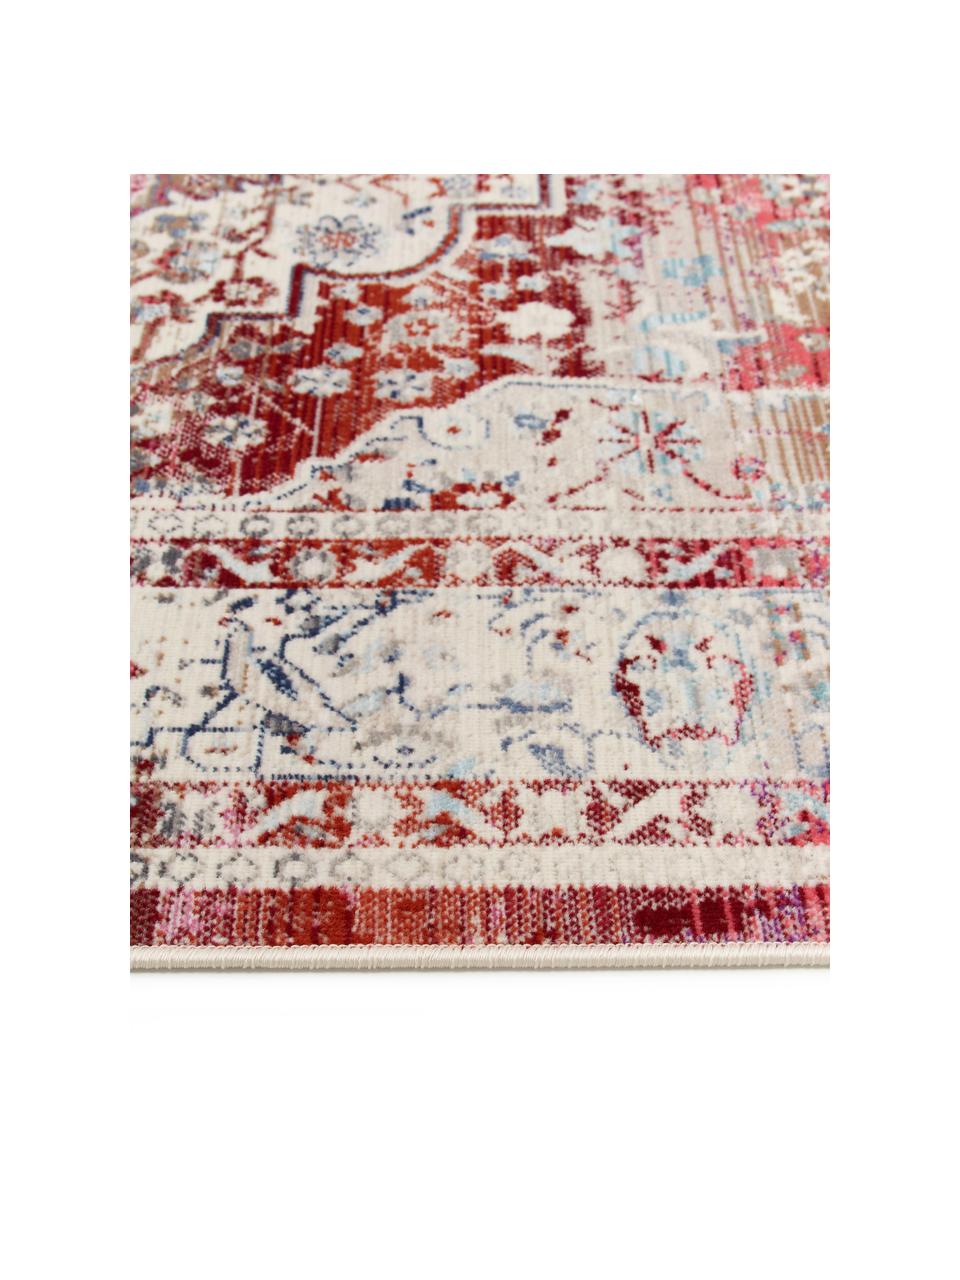 Teppich Vintage Kashan mit Vintagemuster, Flor: 100% Polypropylen, Beige, Rot, Blau, B 120 x L 180 cm (Größe S)